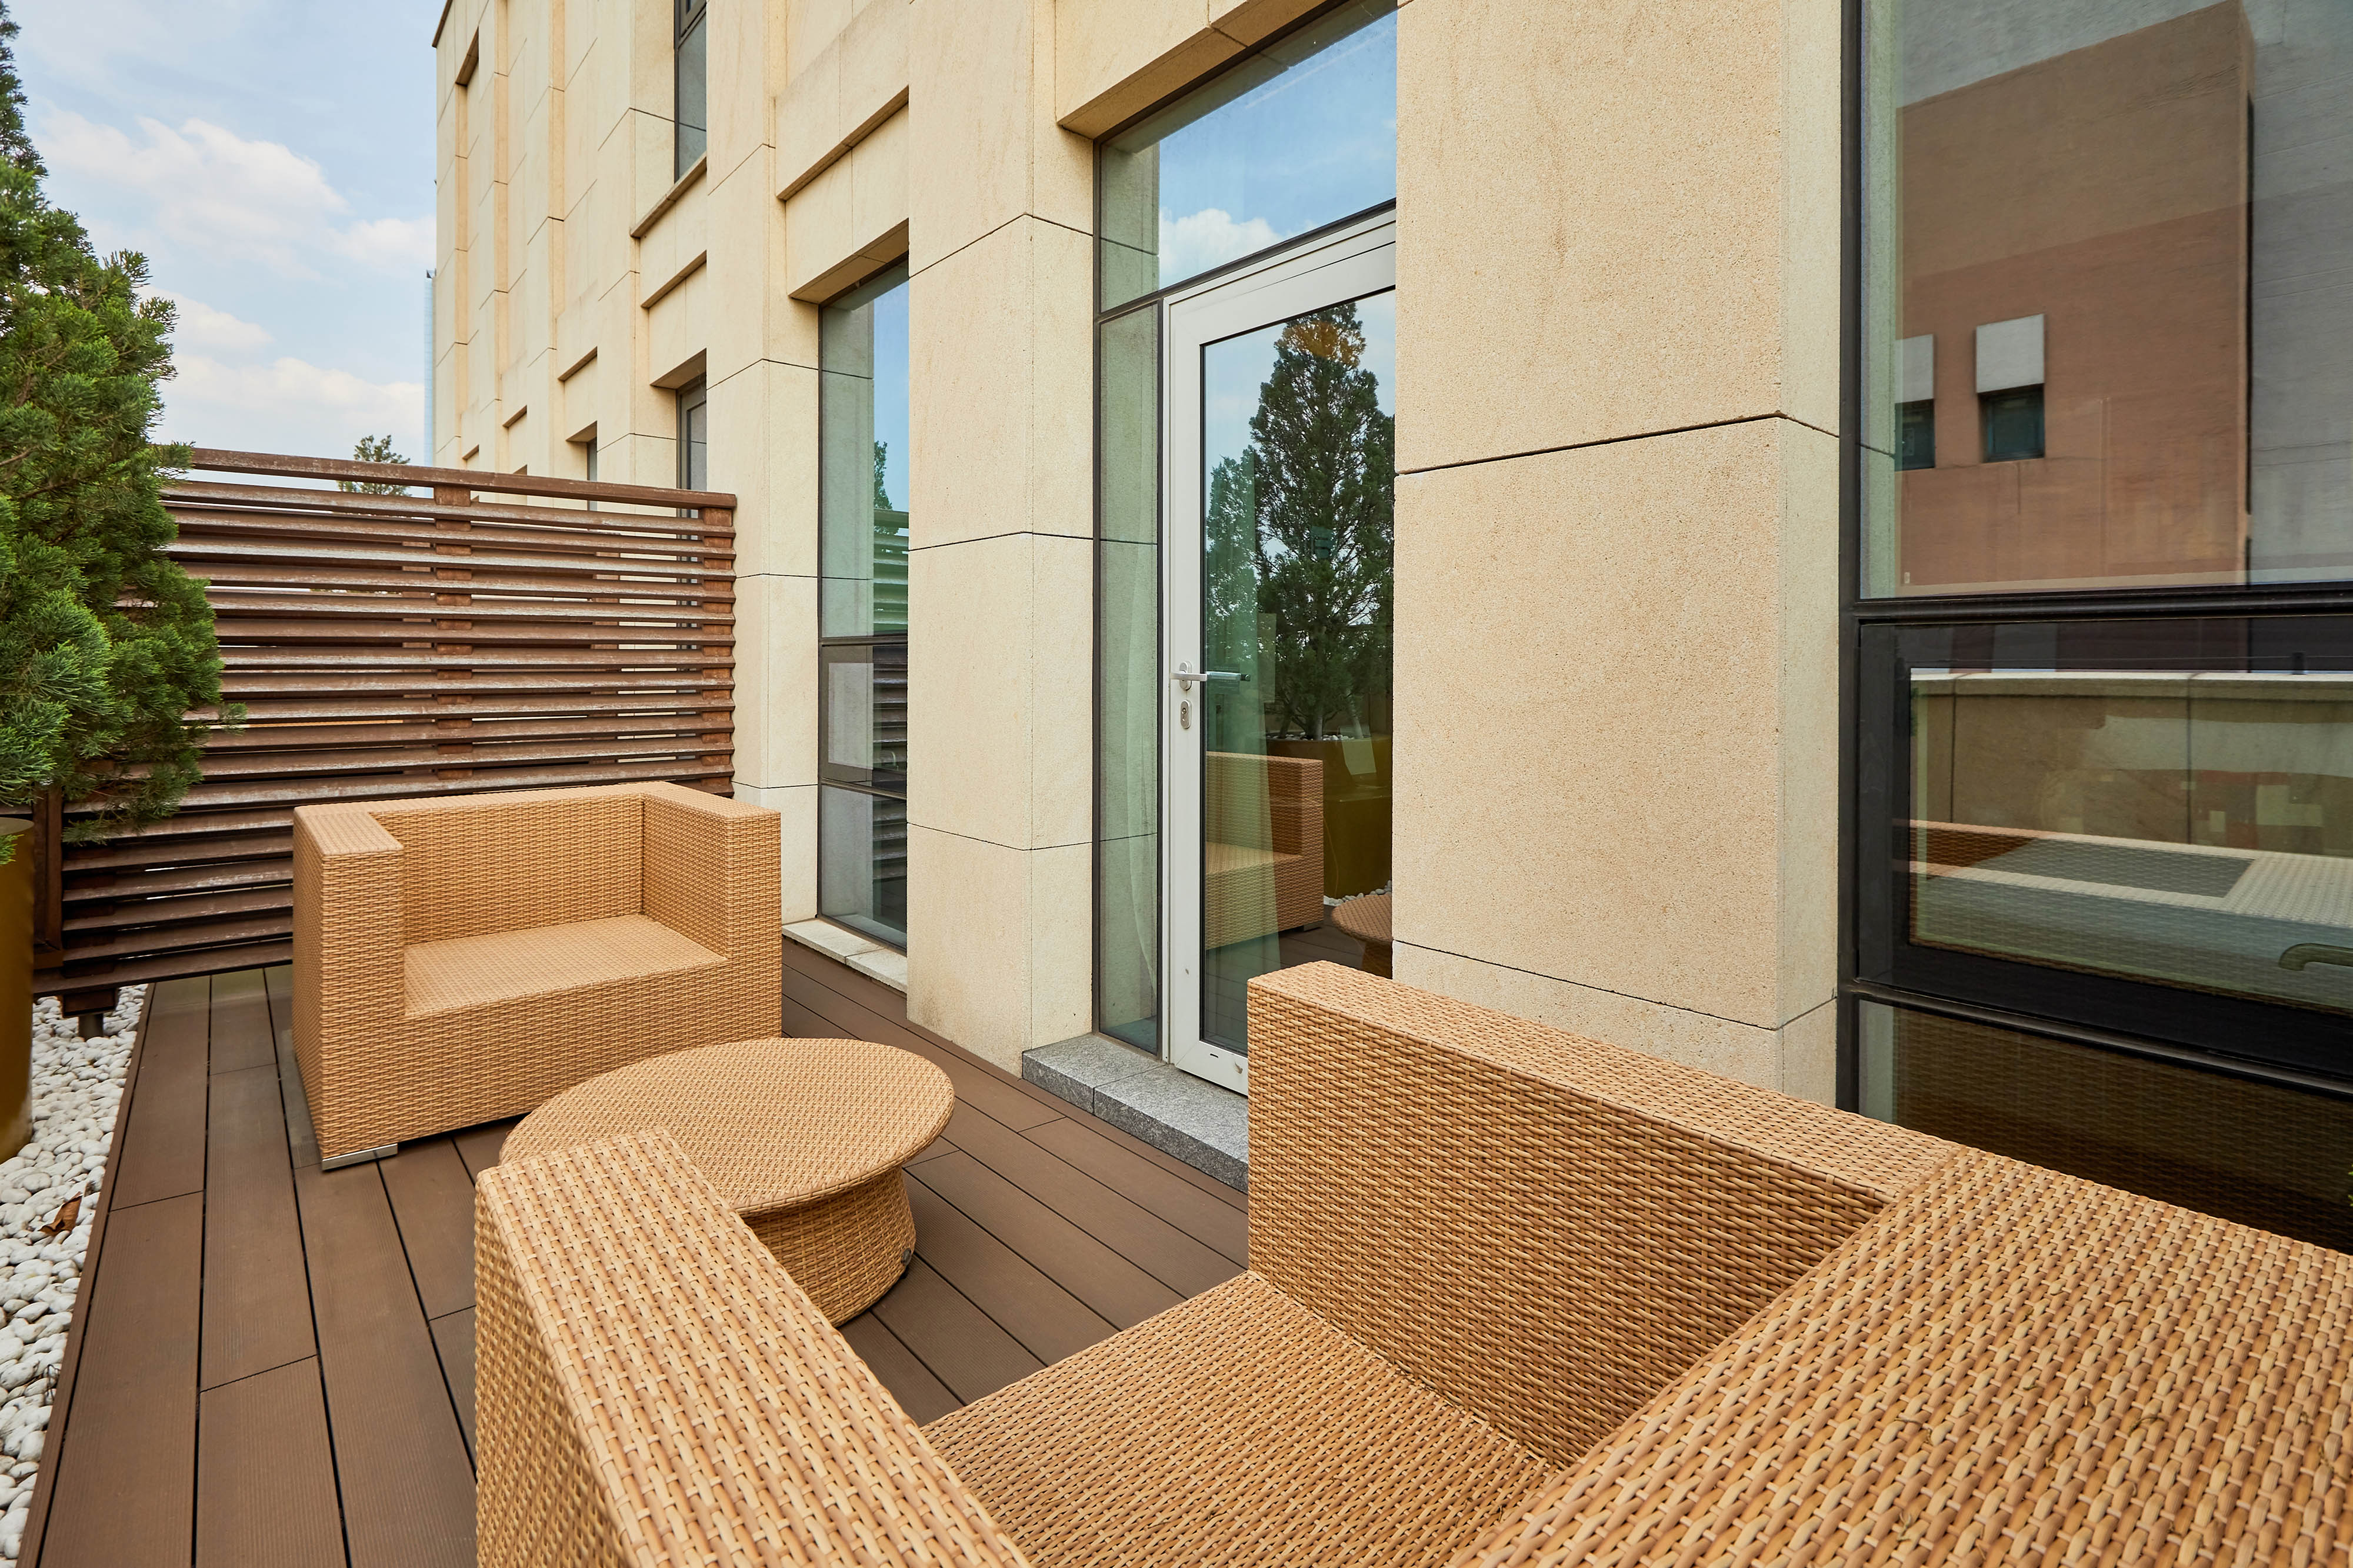 Aloft Urban Suite - Balcony